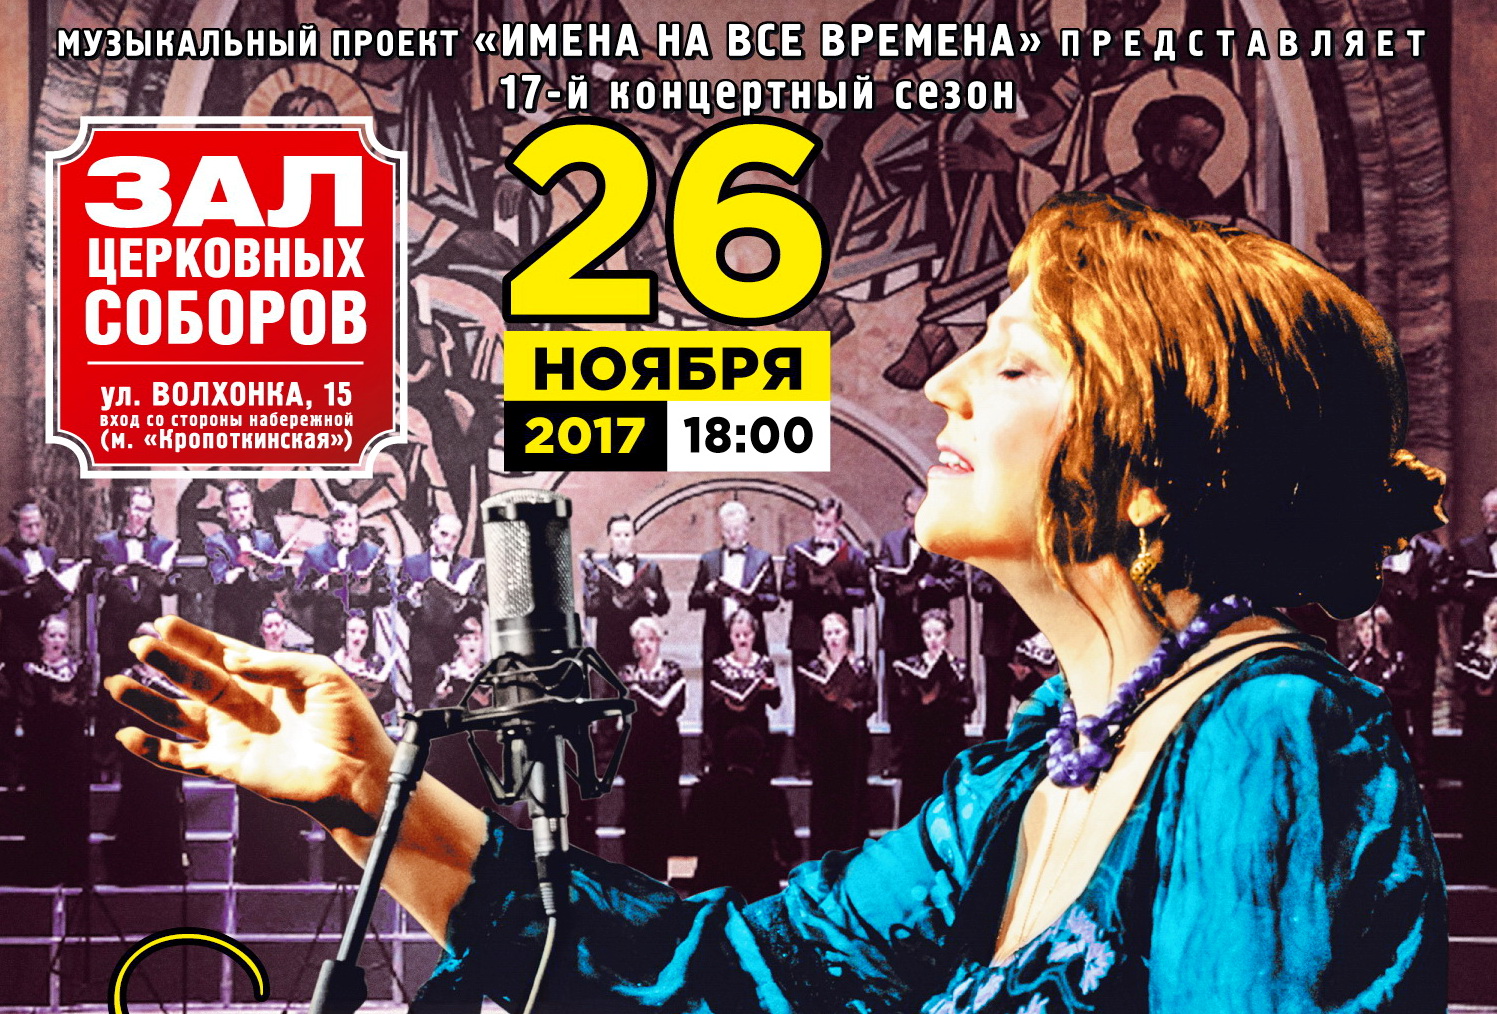 Купить билет на концерт на сайте www.icetickets.ru  